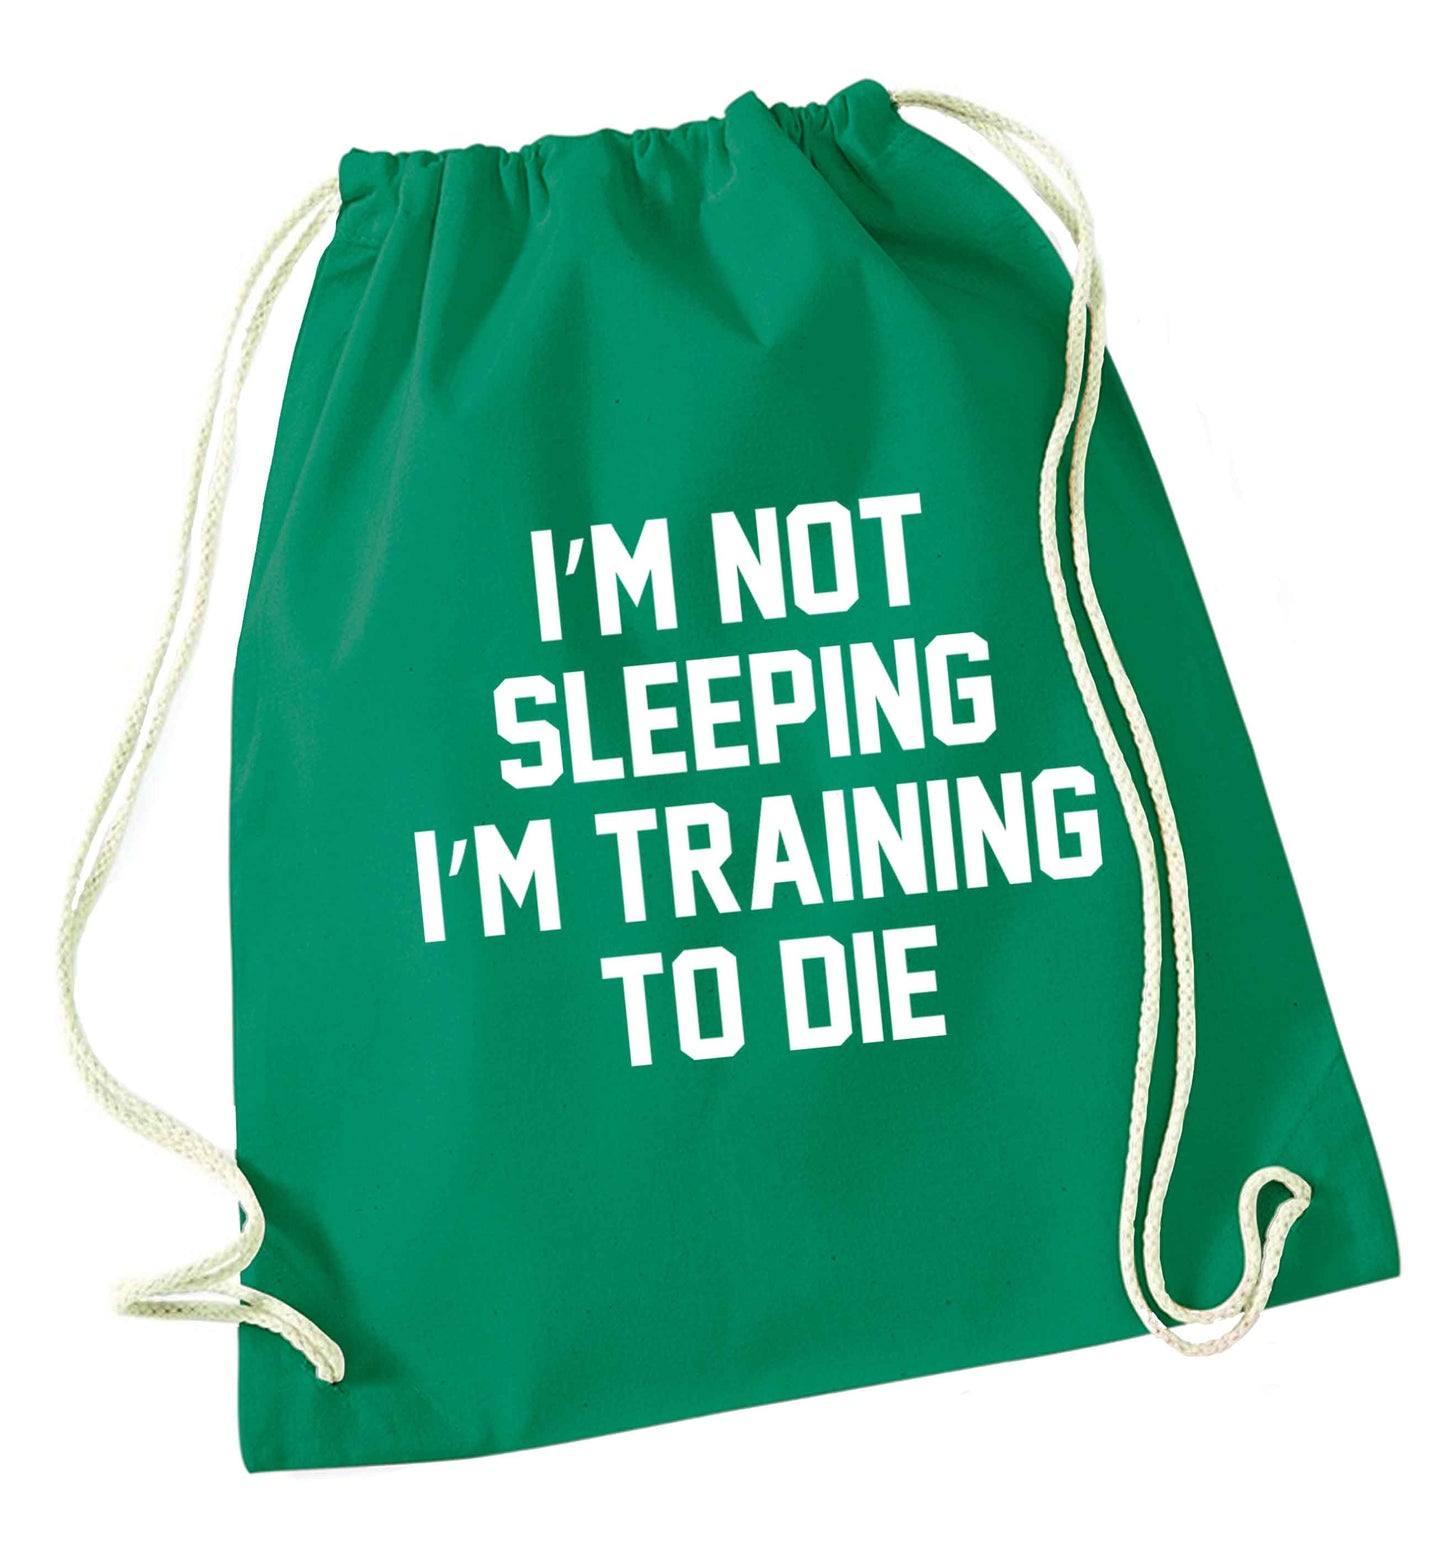 I'm not sleeping I'm training to die green drawstring bag